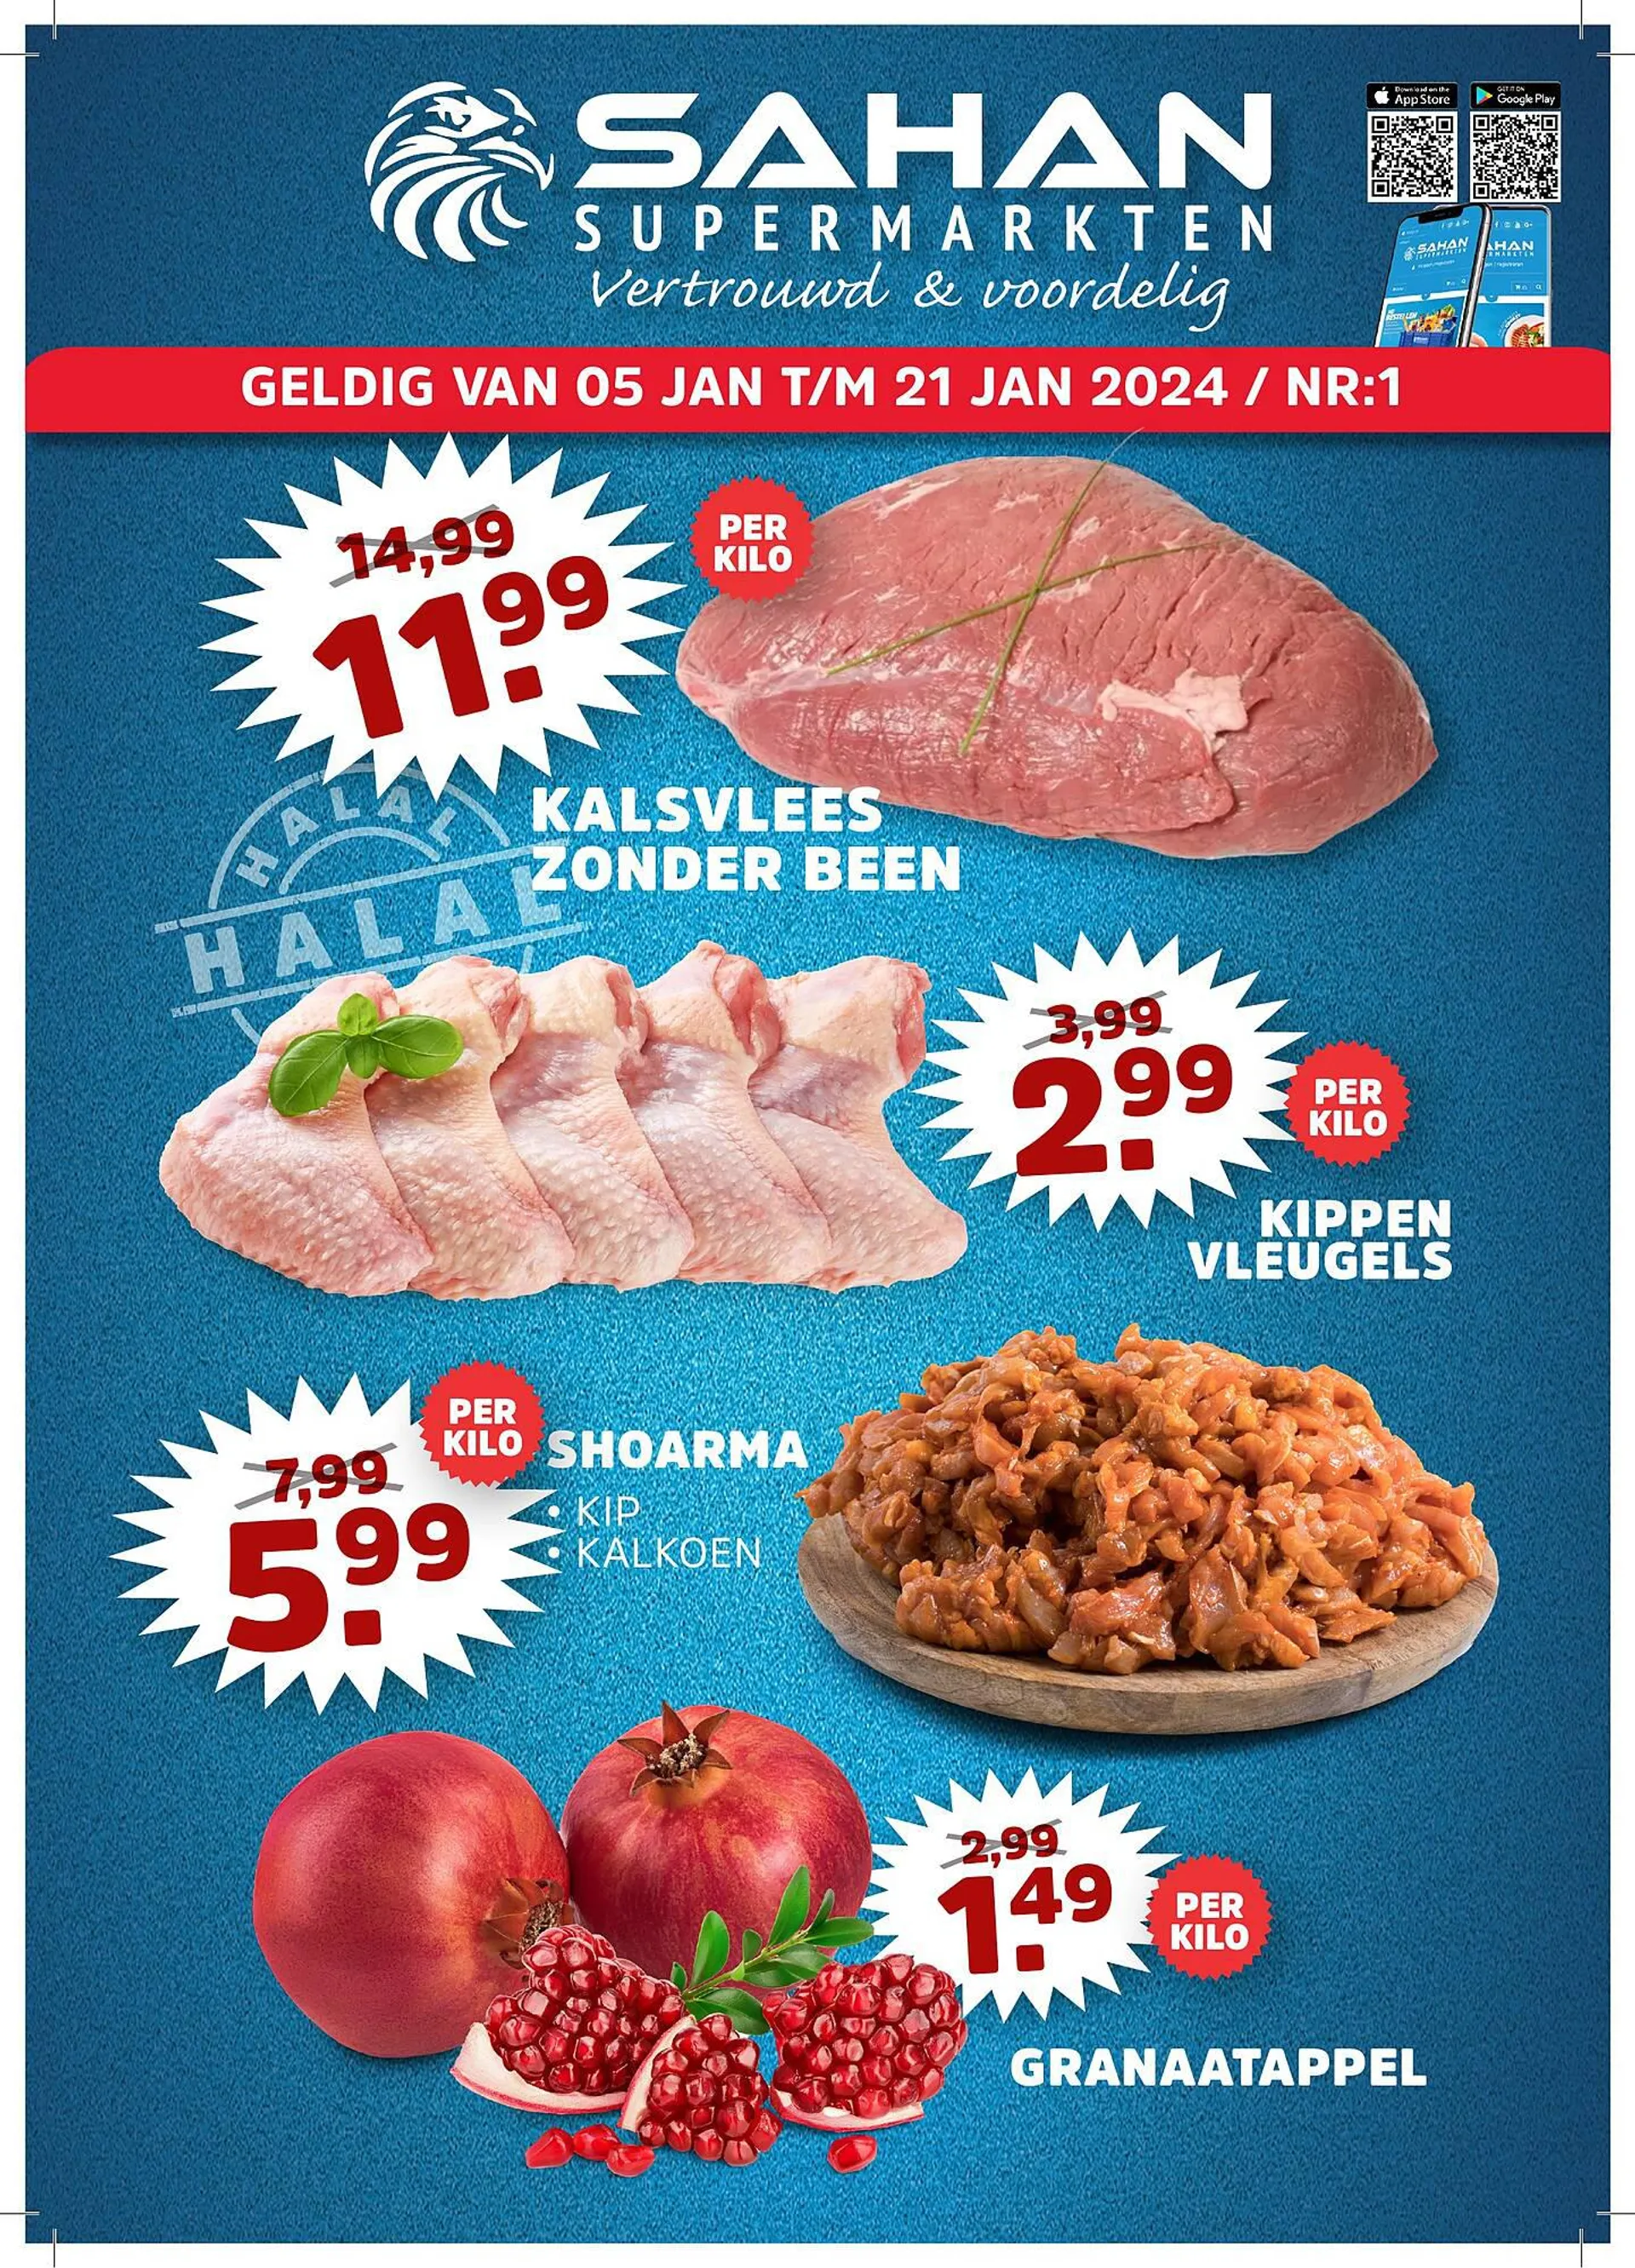 Sahan Supermarkten folder van 5 januari tot 21 januari 2024 - Folder pagina 